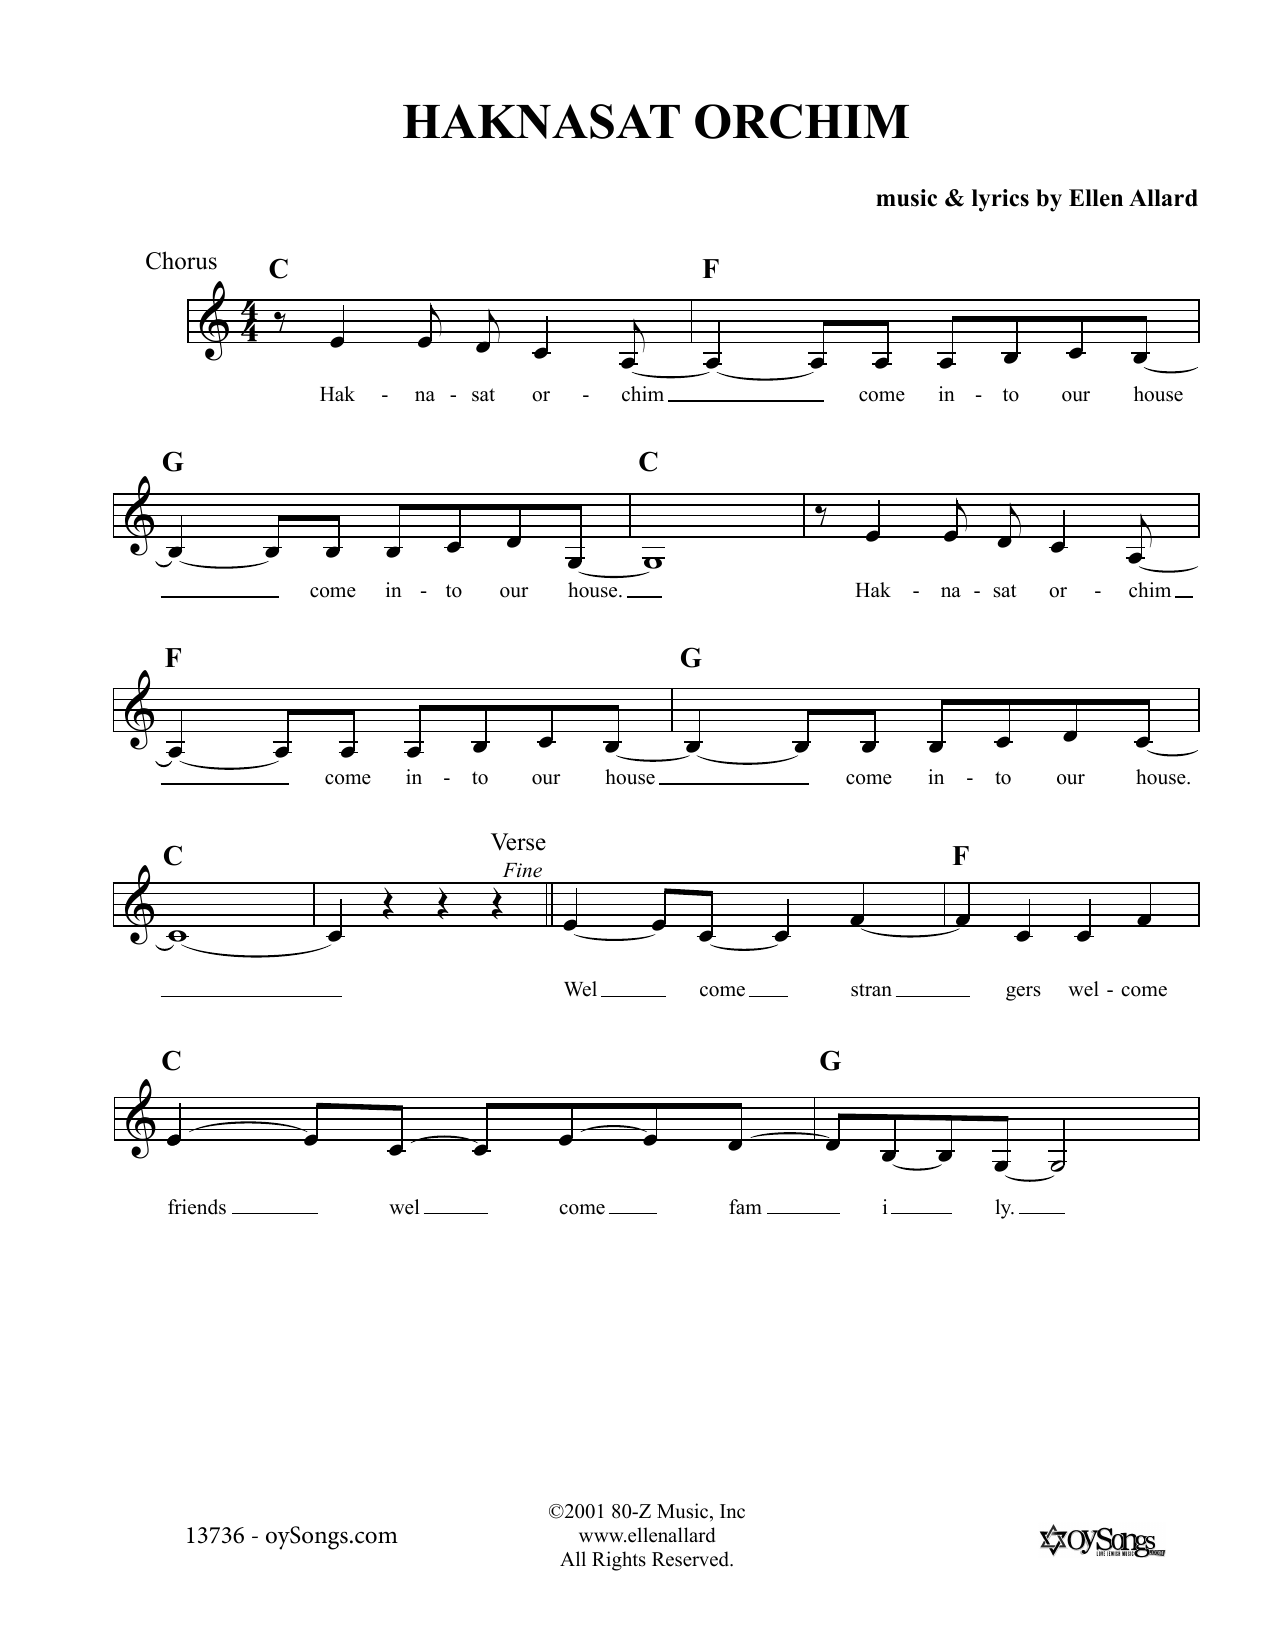 Ellen Allard Haknasat Orchim Sheet Music Notes & Chords for Melody Line, Lyrics & Chords - Download or Print PDF